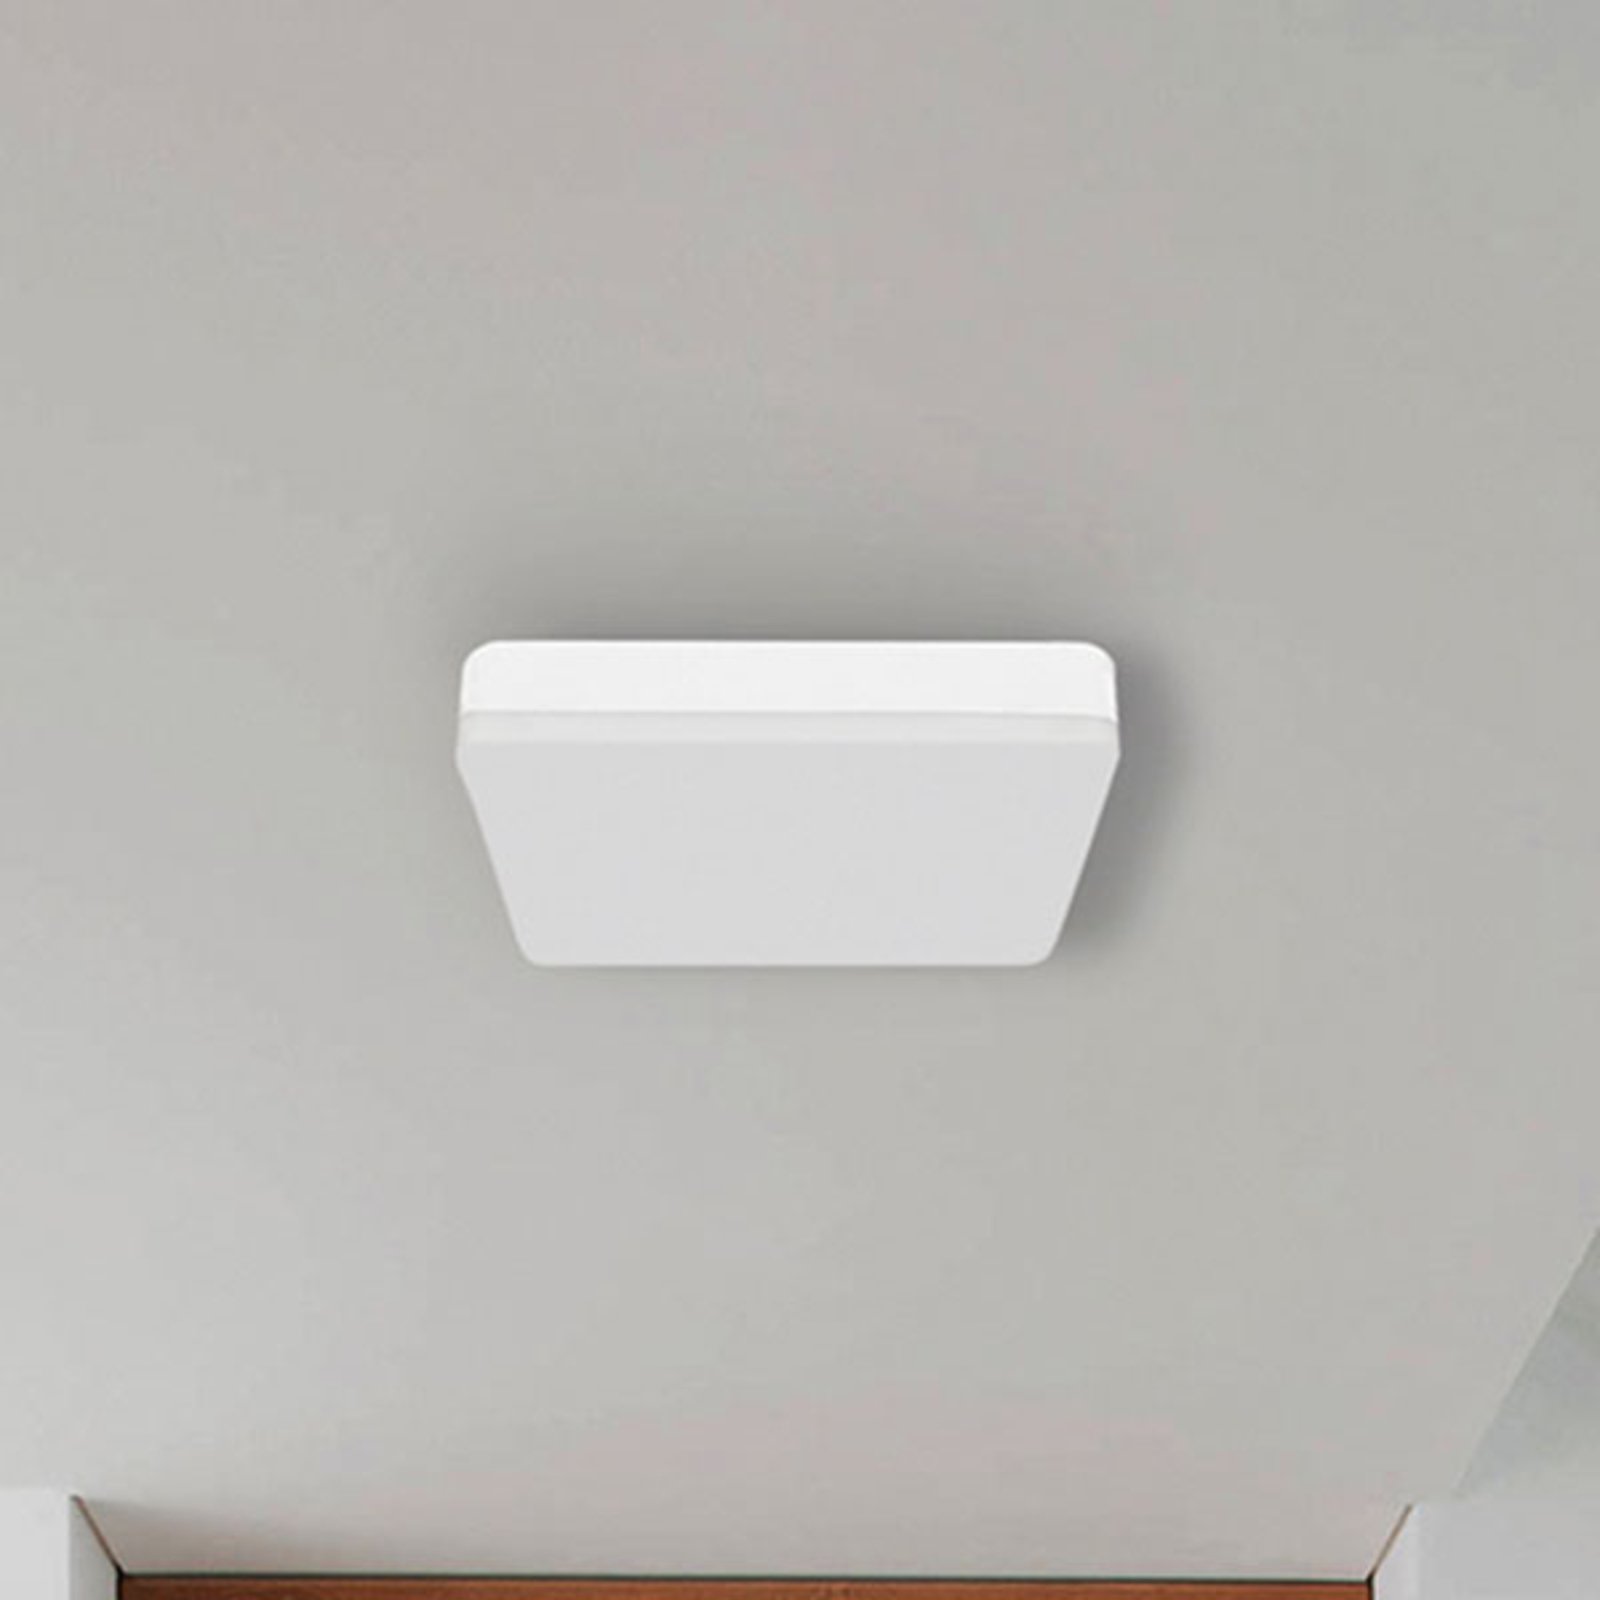 Square LED bathroom ceiling light, motion sensor